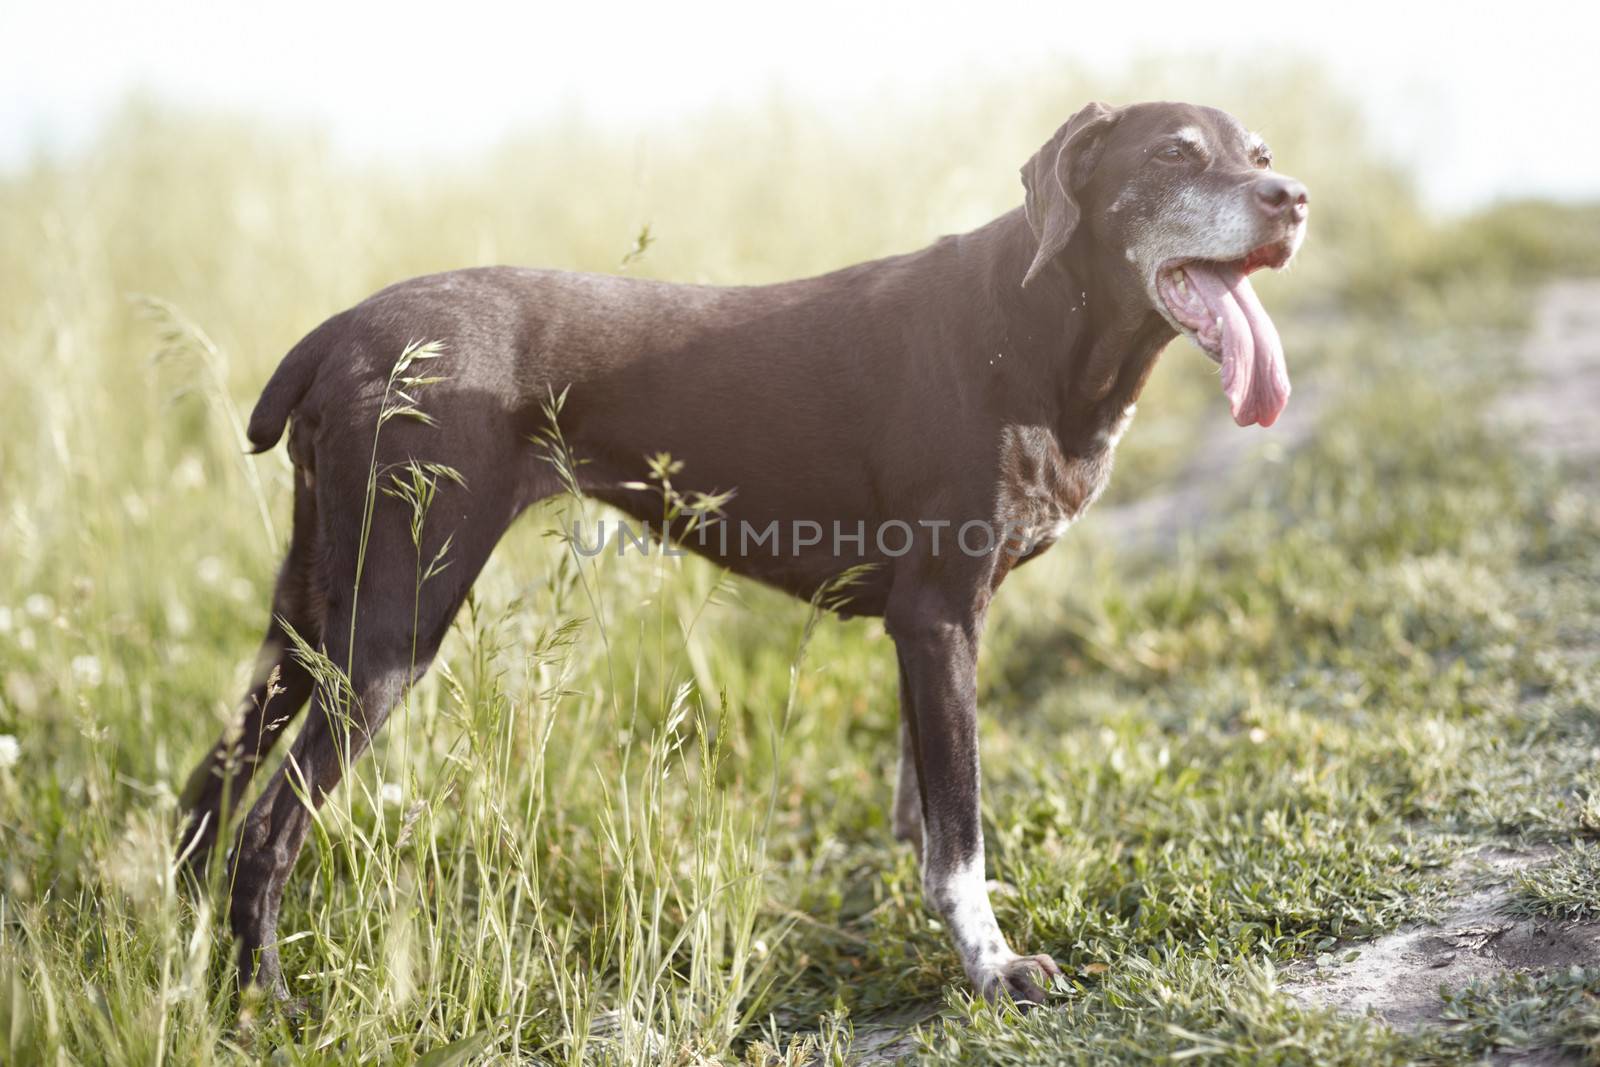 Kurzhaar dog standing outdoors. Natural light and colors